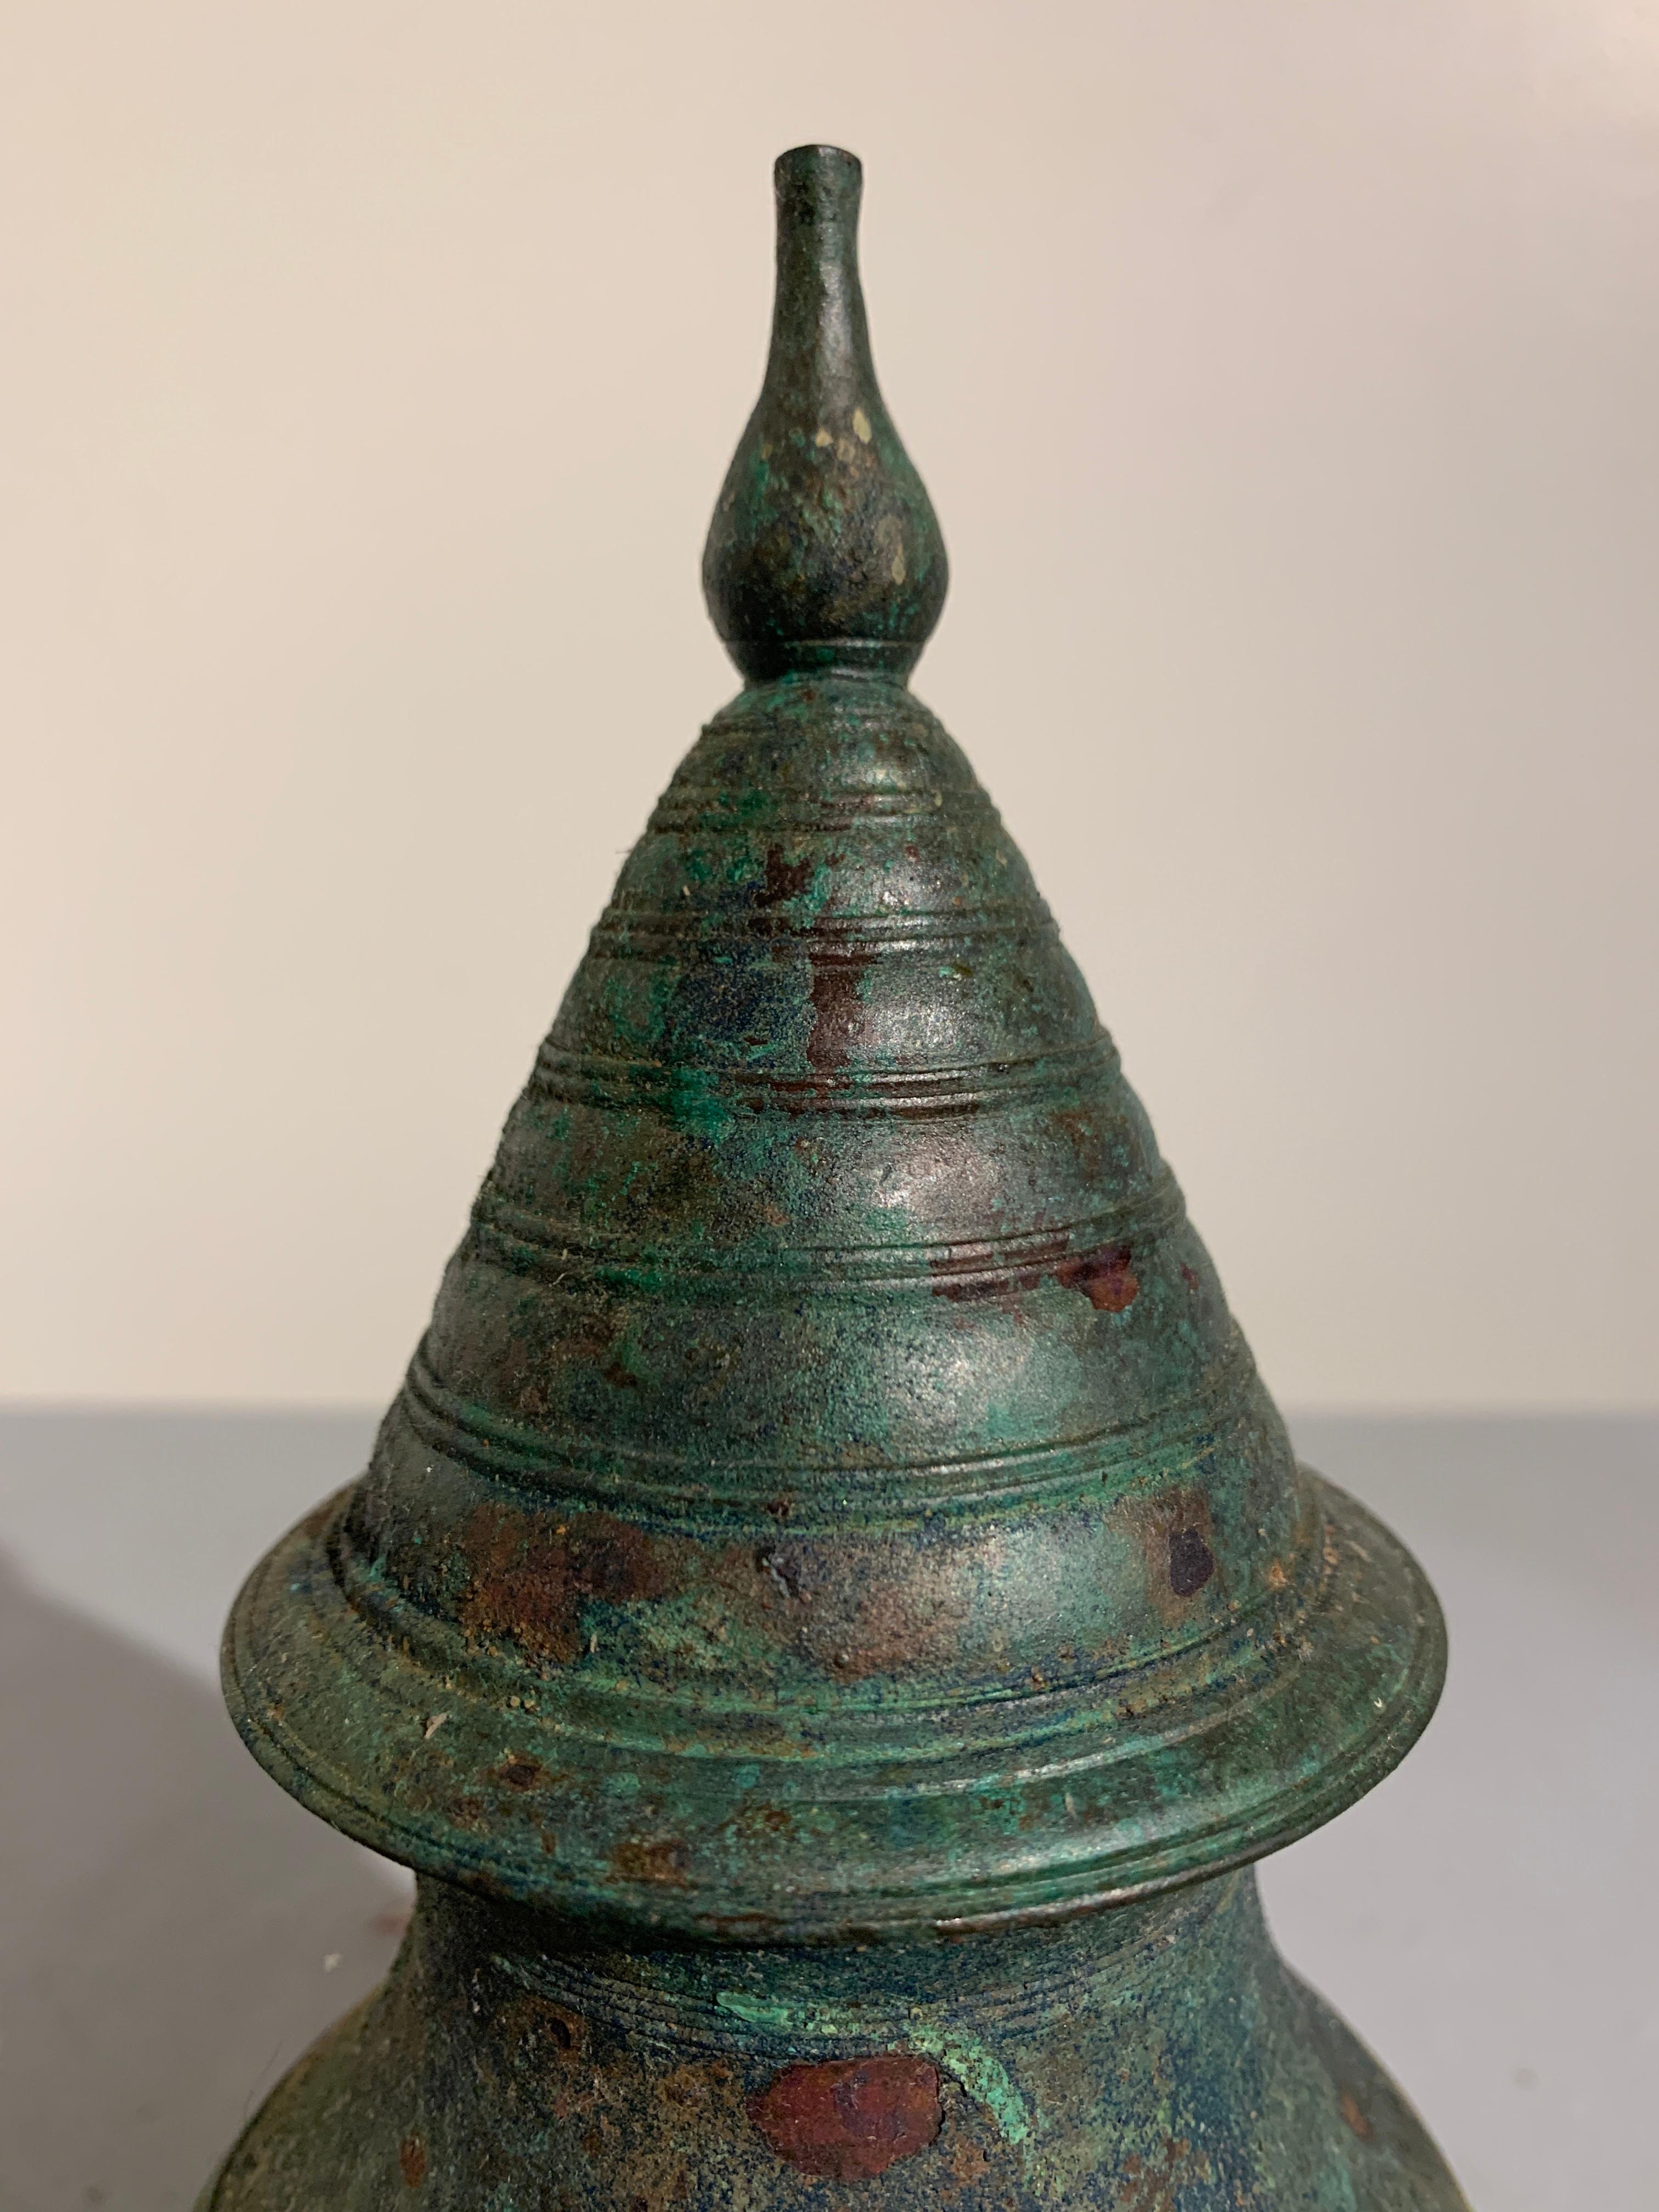 Bronze Grand pot à chaux khmer en bronze en forme de stupa:: période d'Angkor:: 12e-14e siècle